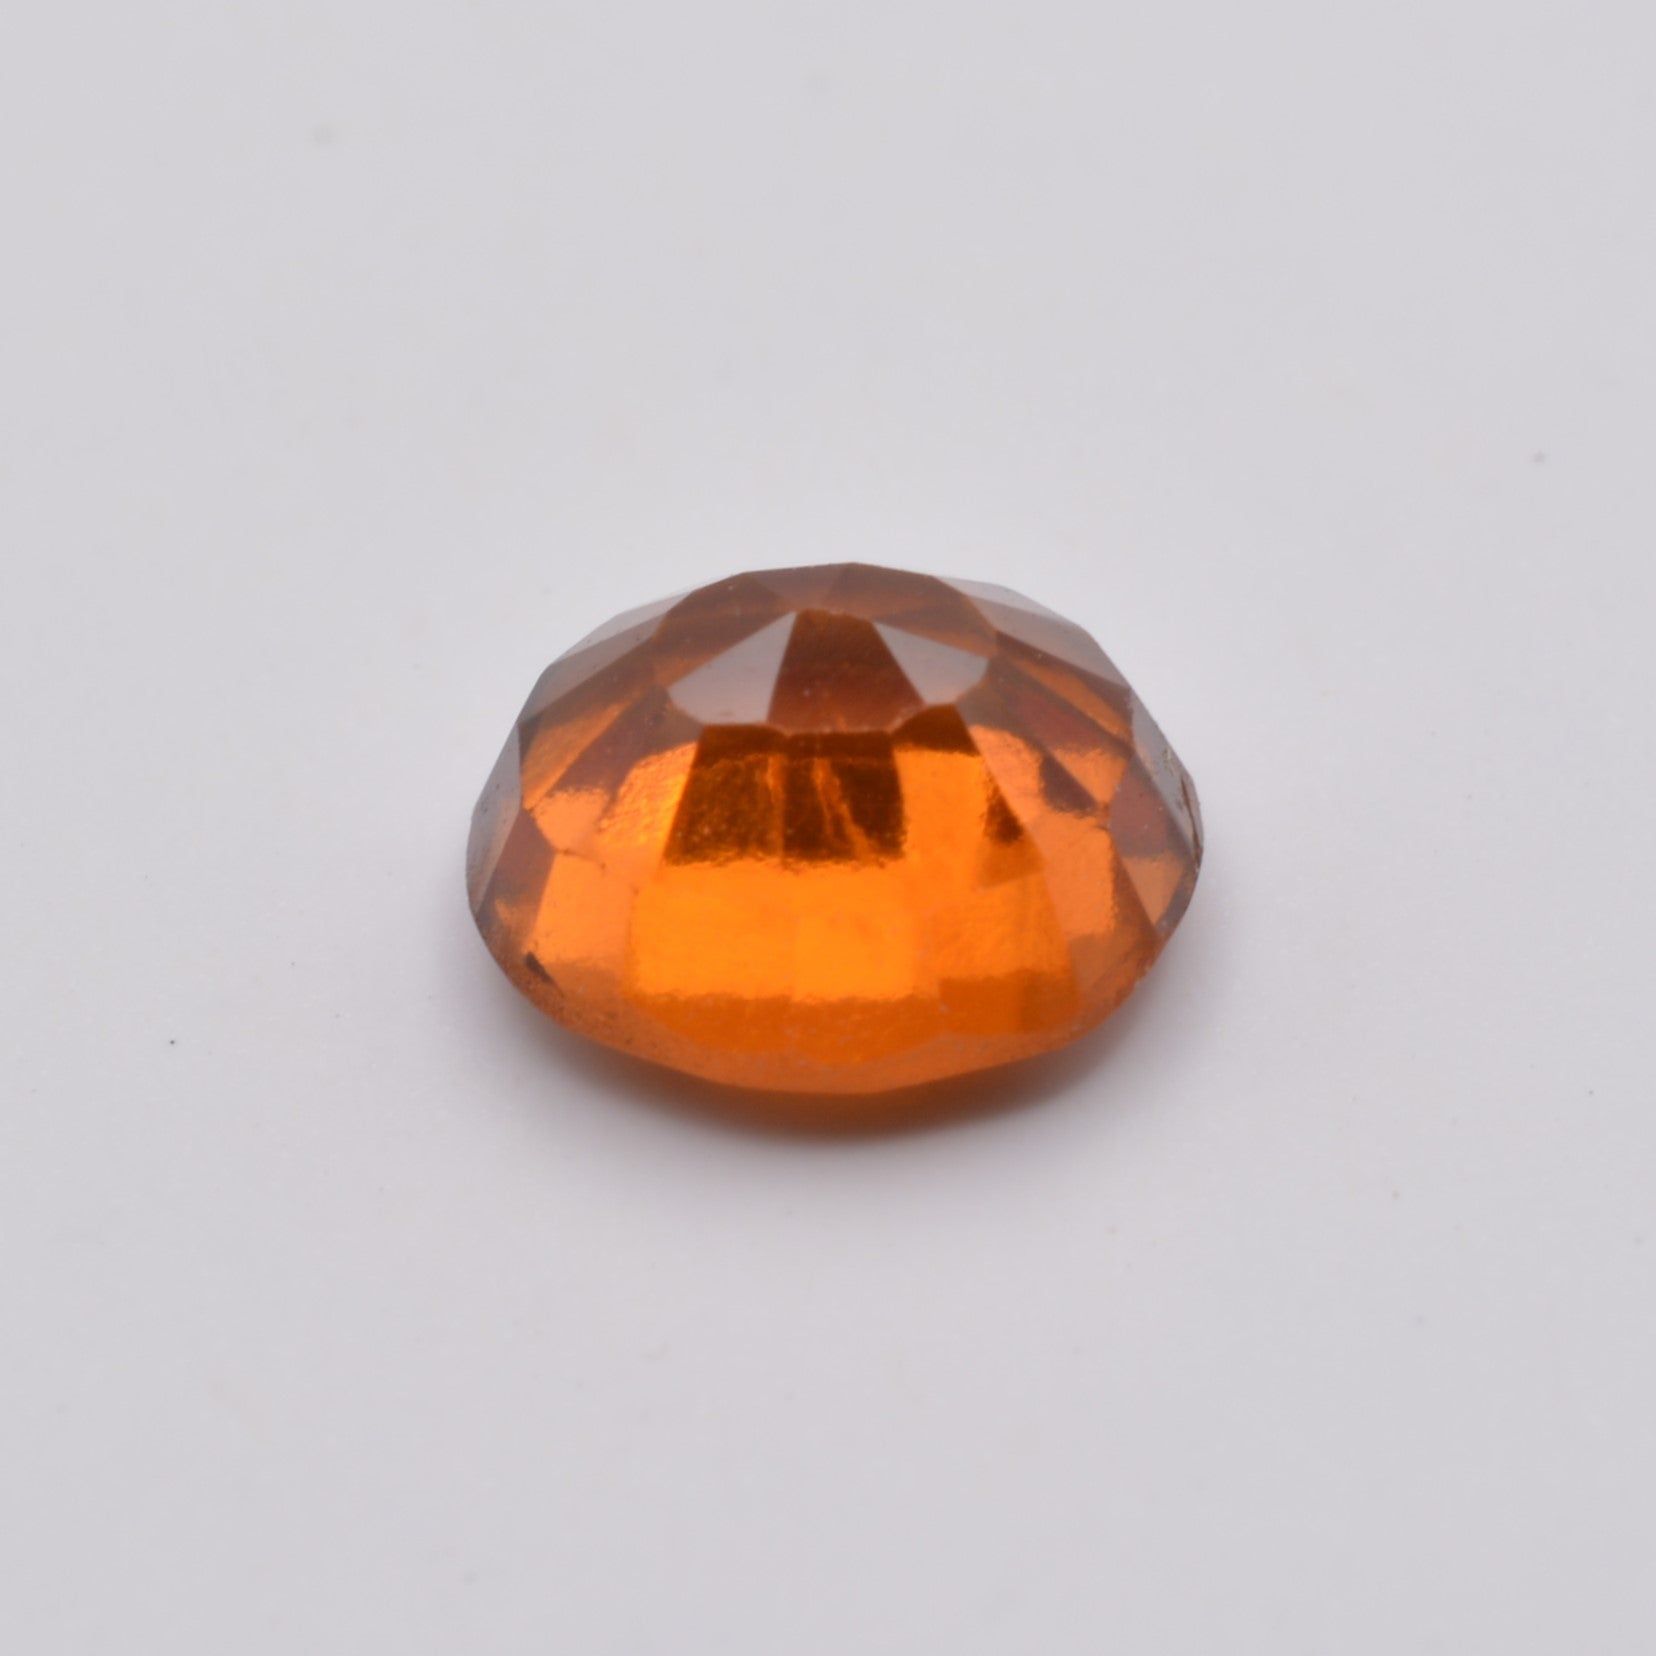 Grenat Hessonite 1,26ct - pierre précieuse - gemme